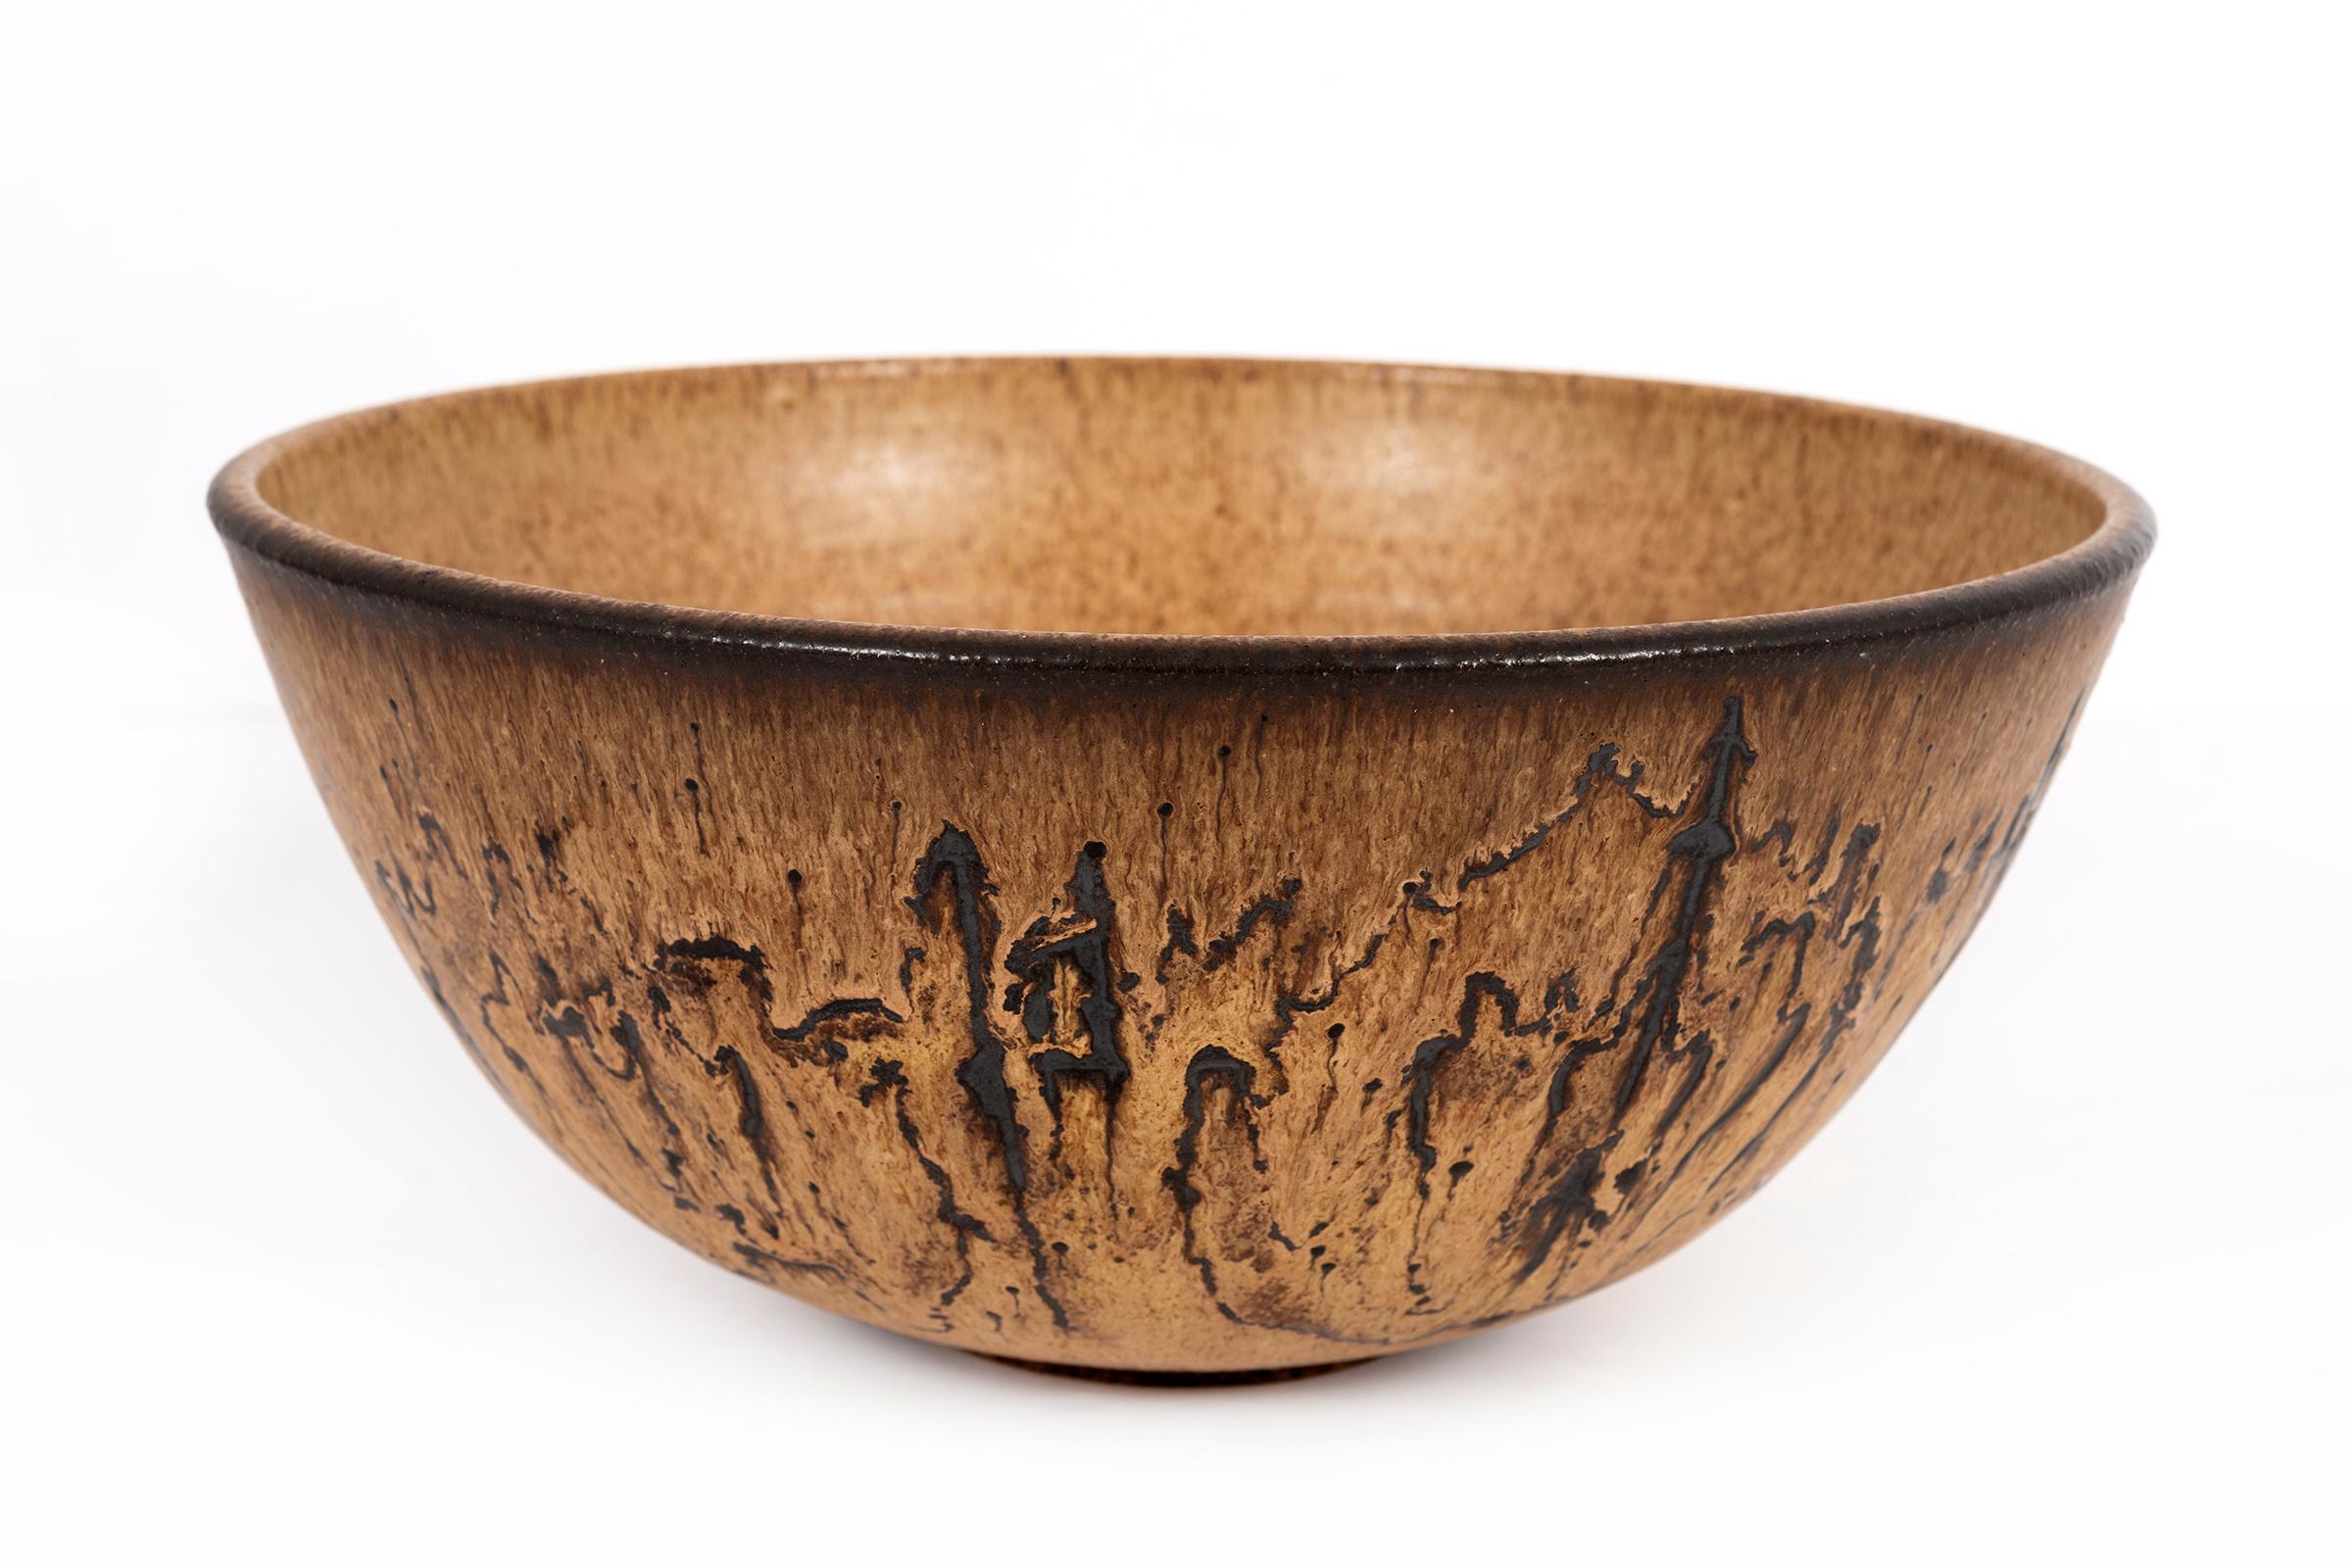 Clyde Burt ceramic bowl, beautiful technical glazes. 
Signed [CB] underside.